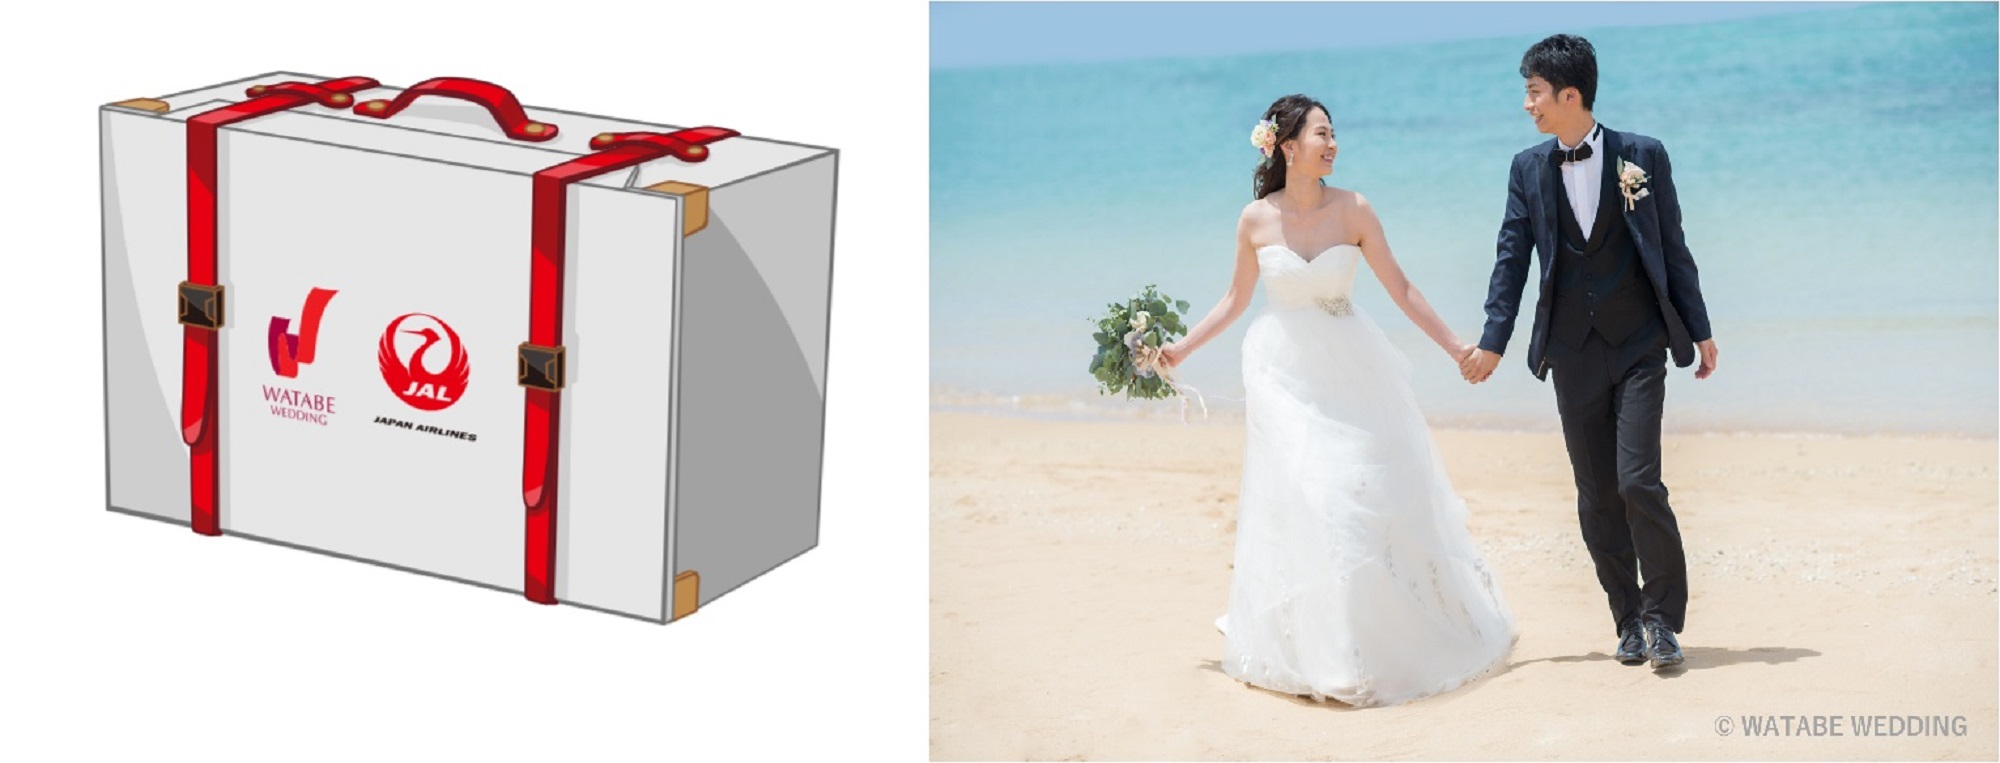 JAL×ワタベウェディング ハワイ挙式をより安心で快適に!
「JAL Wedding Dress BOX」2019年6月より新サービス開始
～ウェディングドレスをキレイな状態で保管・配送可能な専用梱包ボックスを開発～